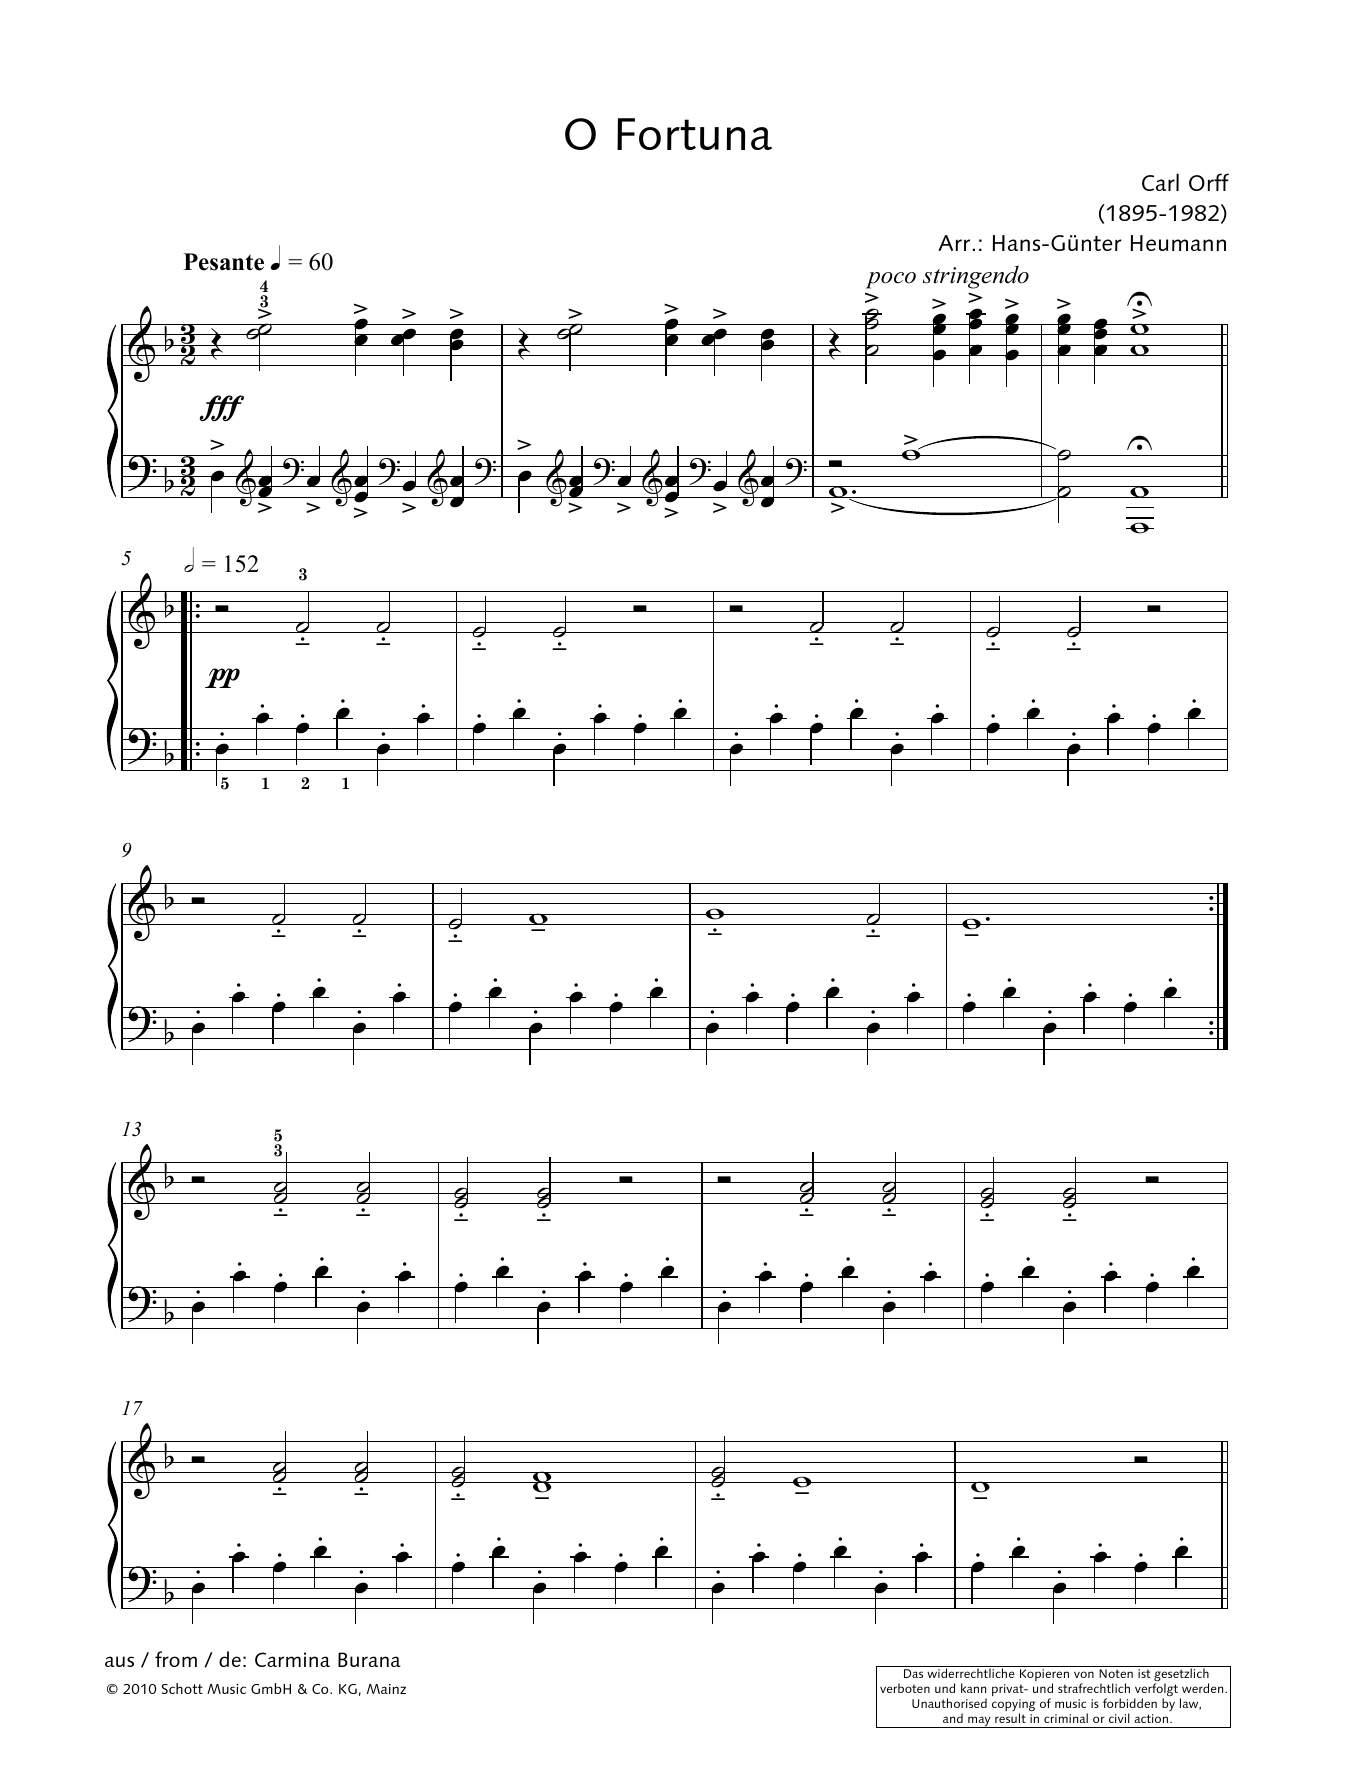 Hans-Gunter Heumann O Fortuna Sheet Music Notes & Chords for Piano Solo - Download or Print PDF